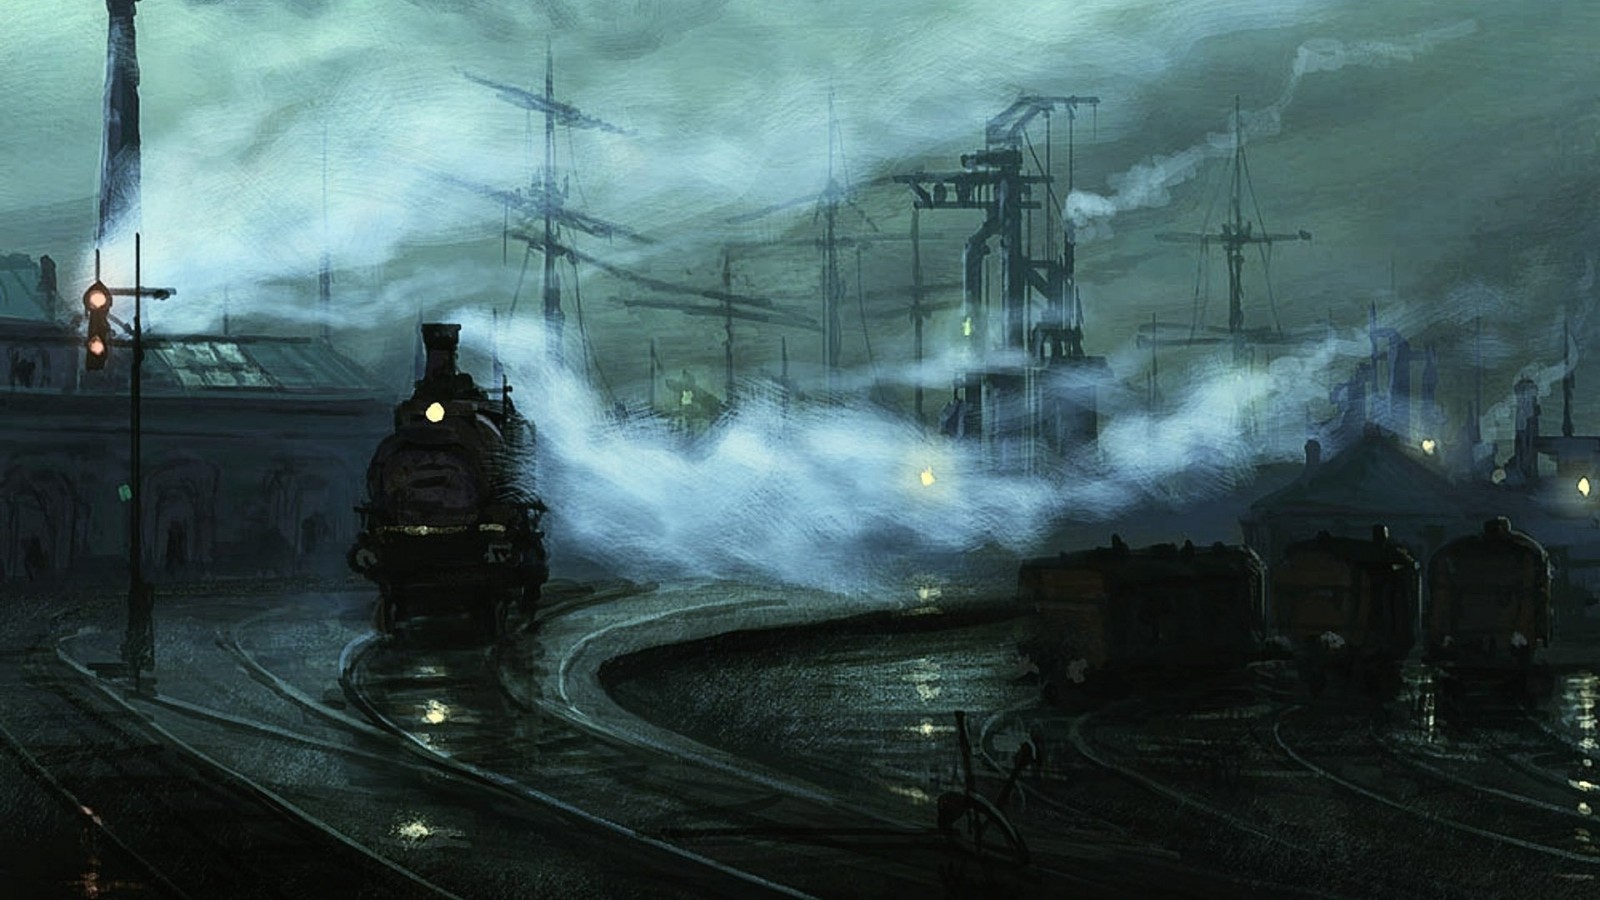 1920x1080_px_mist_painting_Railway_Train-1307343.jpg